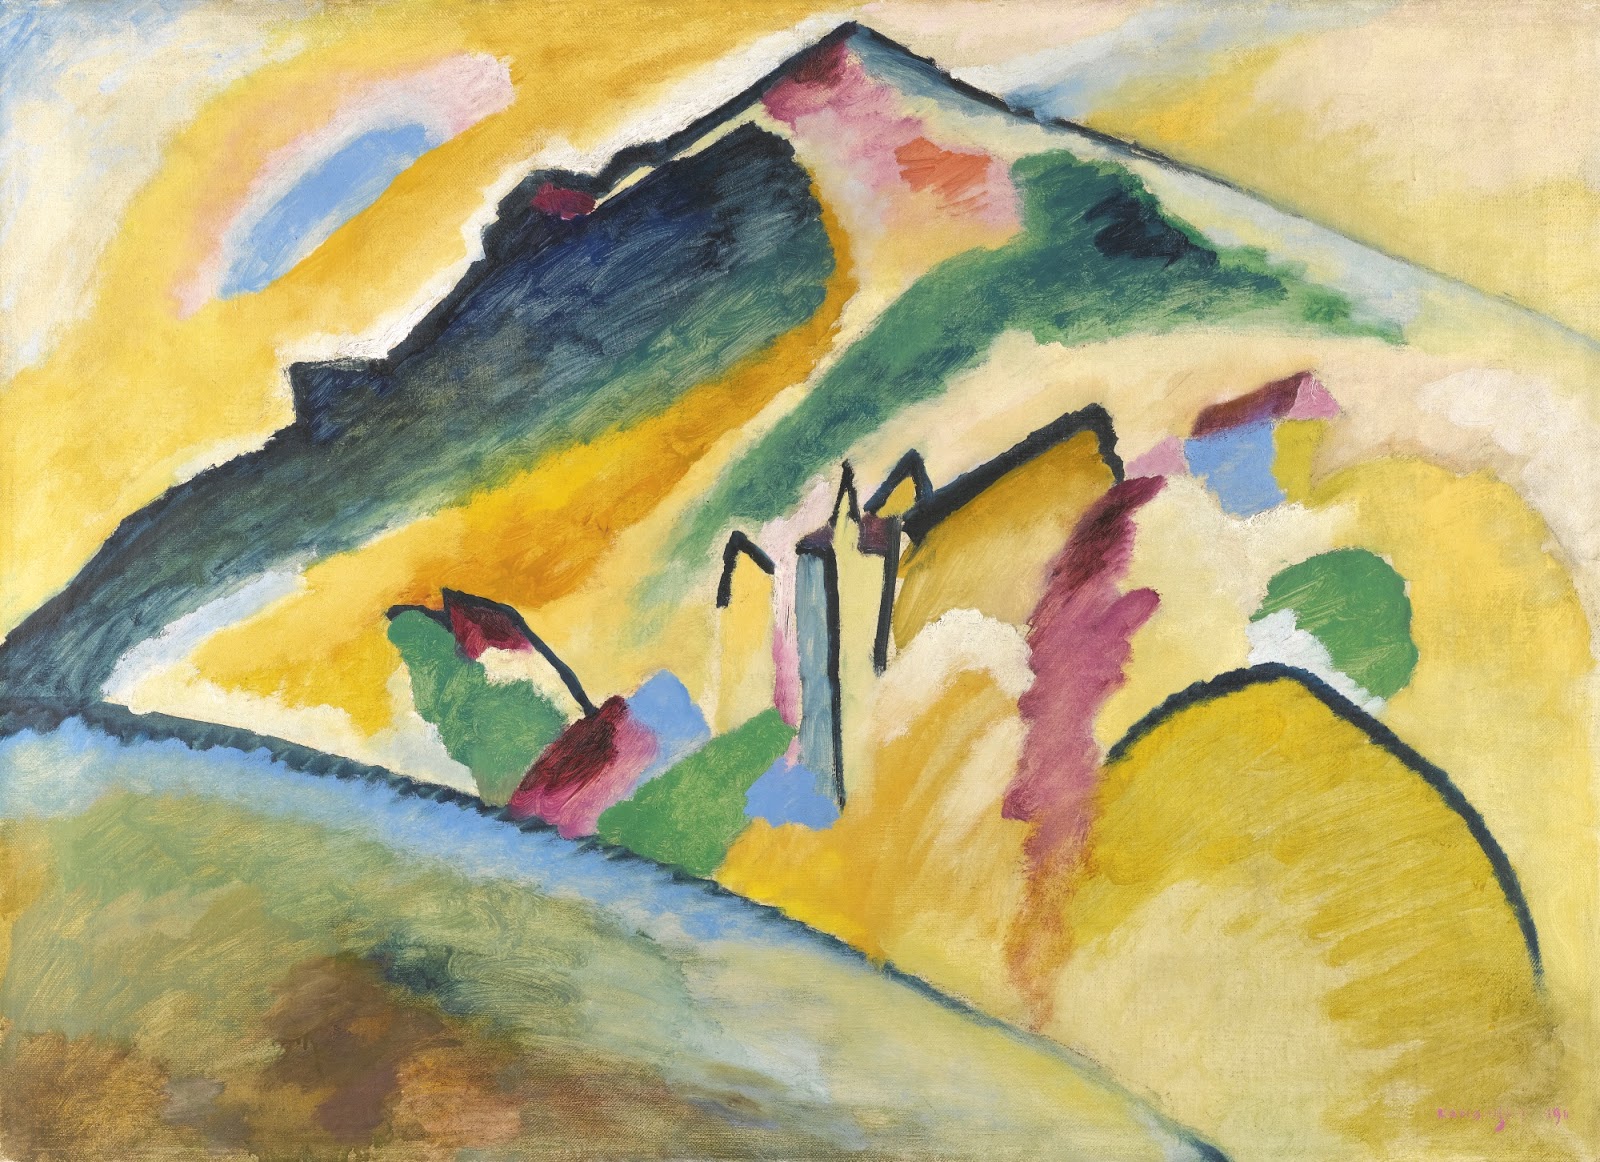 Wassily+Kandinsky-1866-1944 (354).jpg